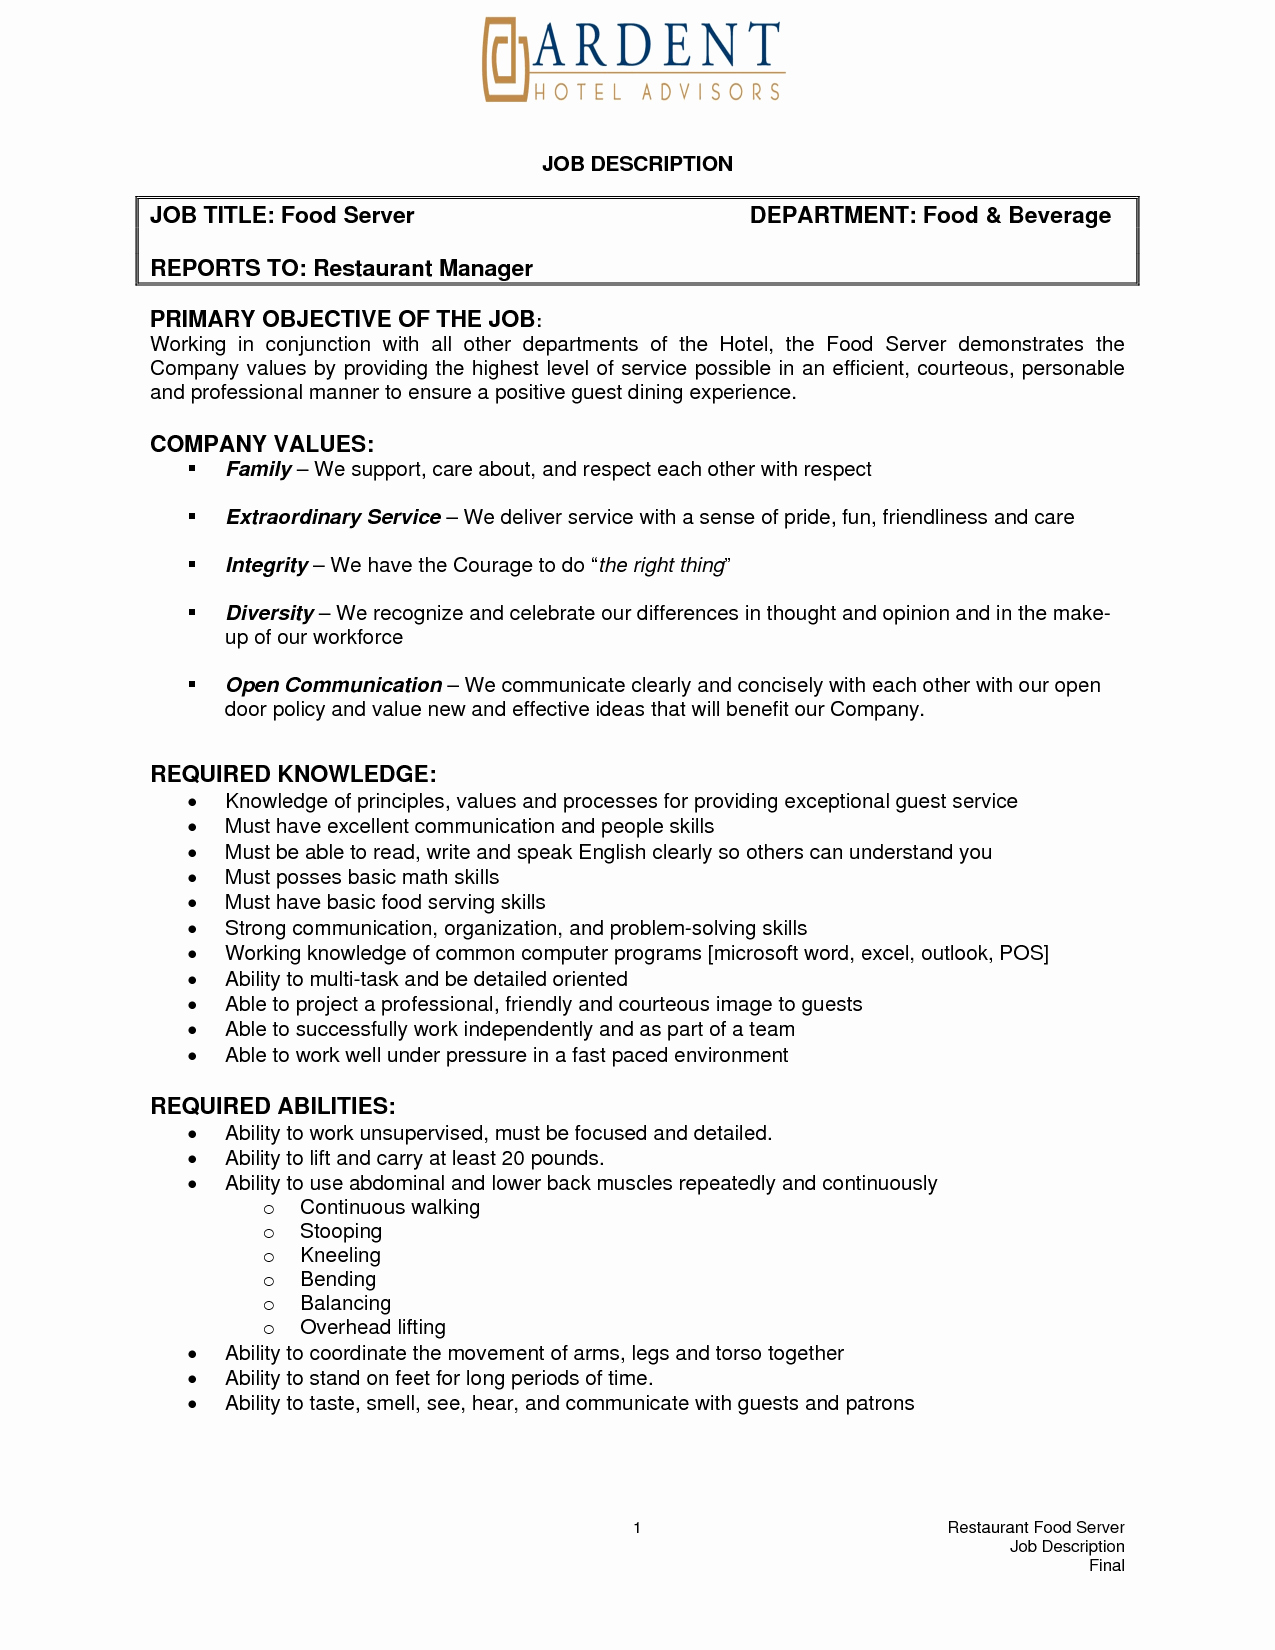 Resume for Banquet Server Catering Job Description